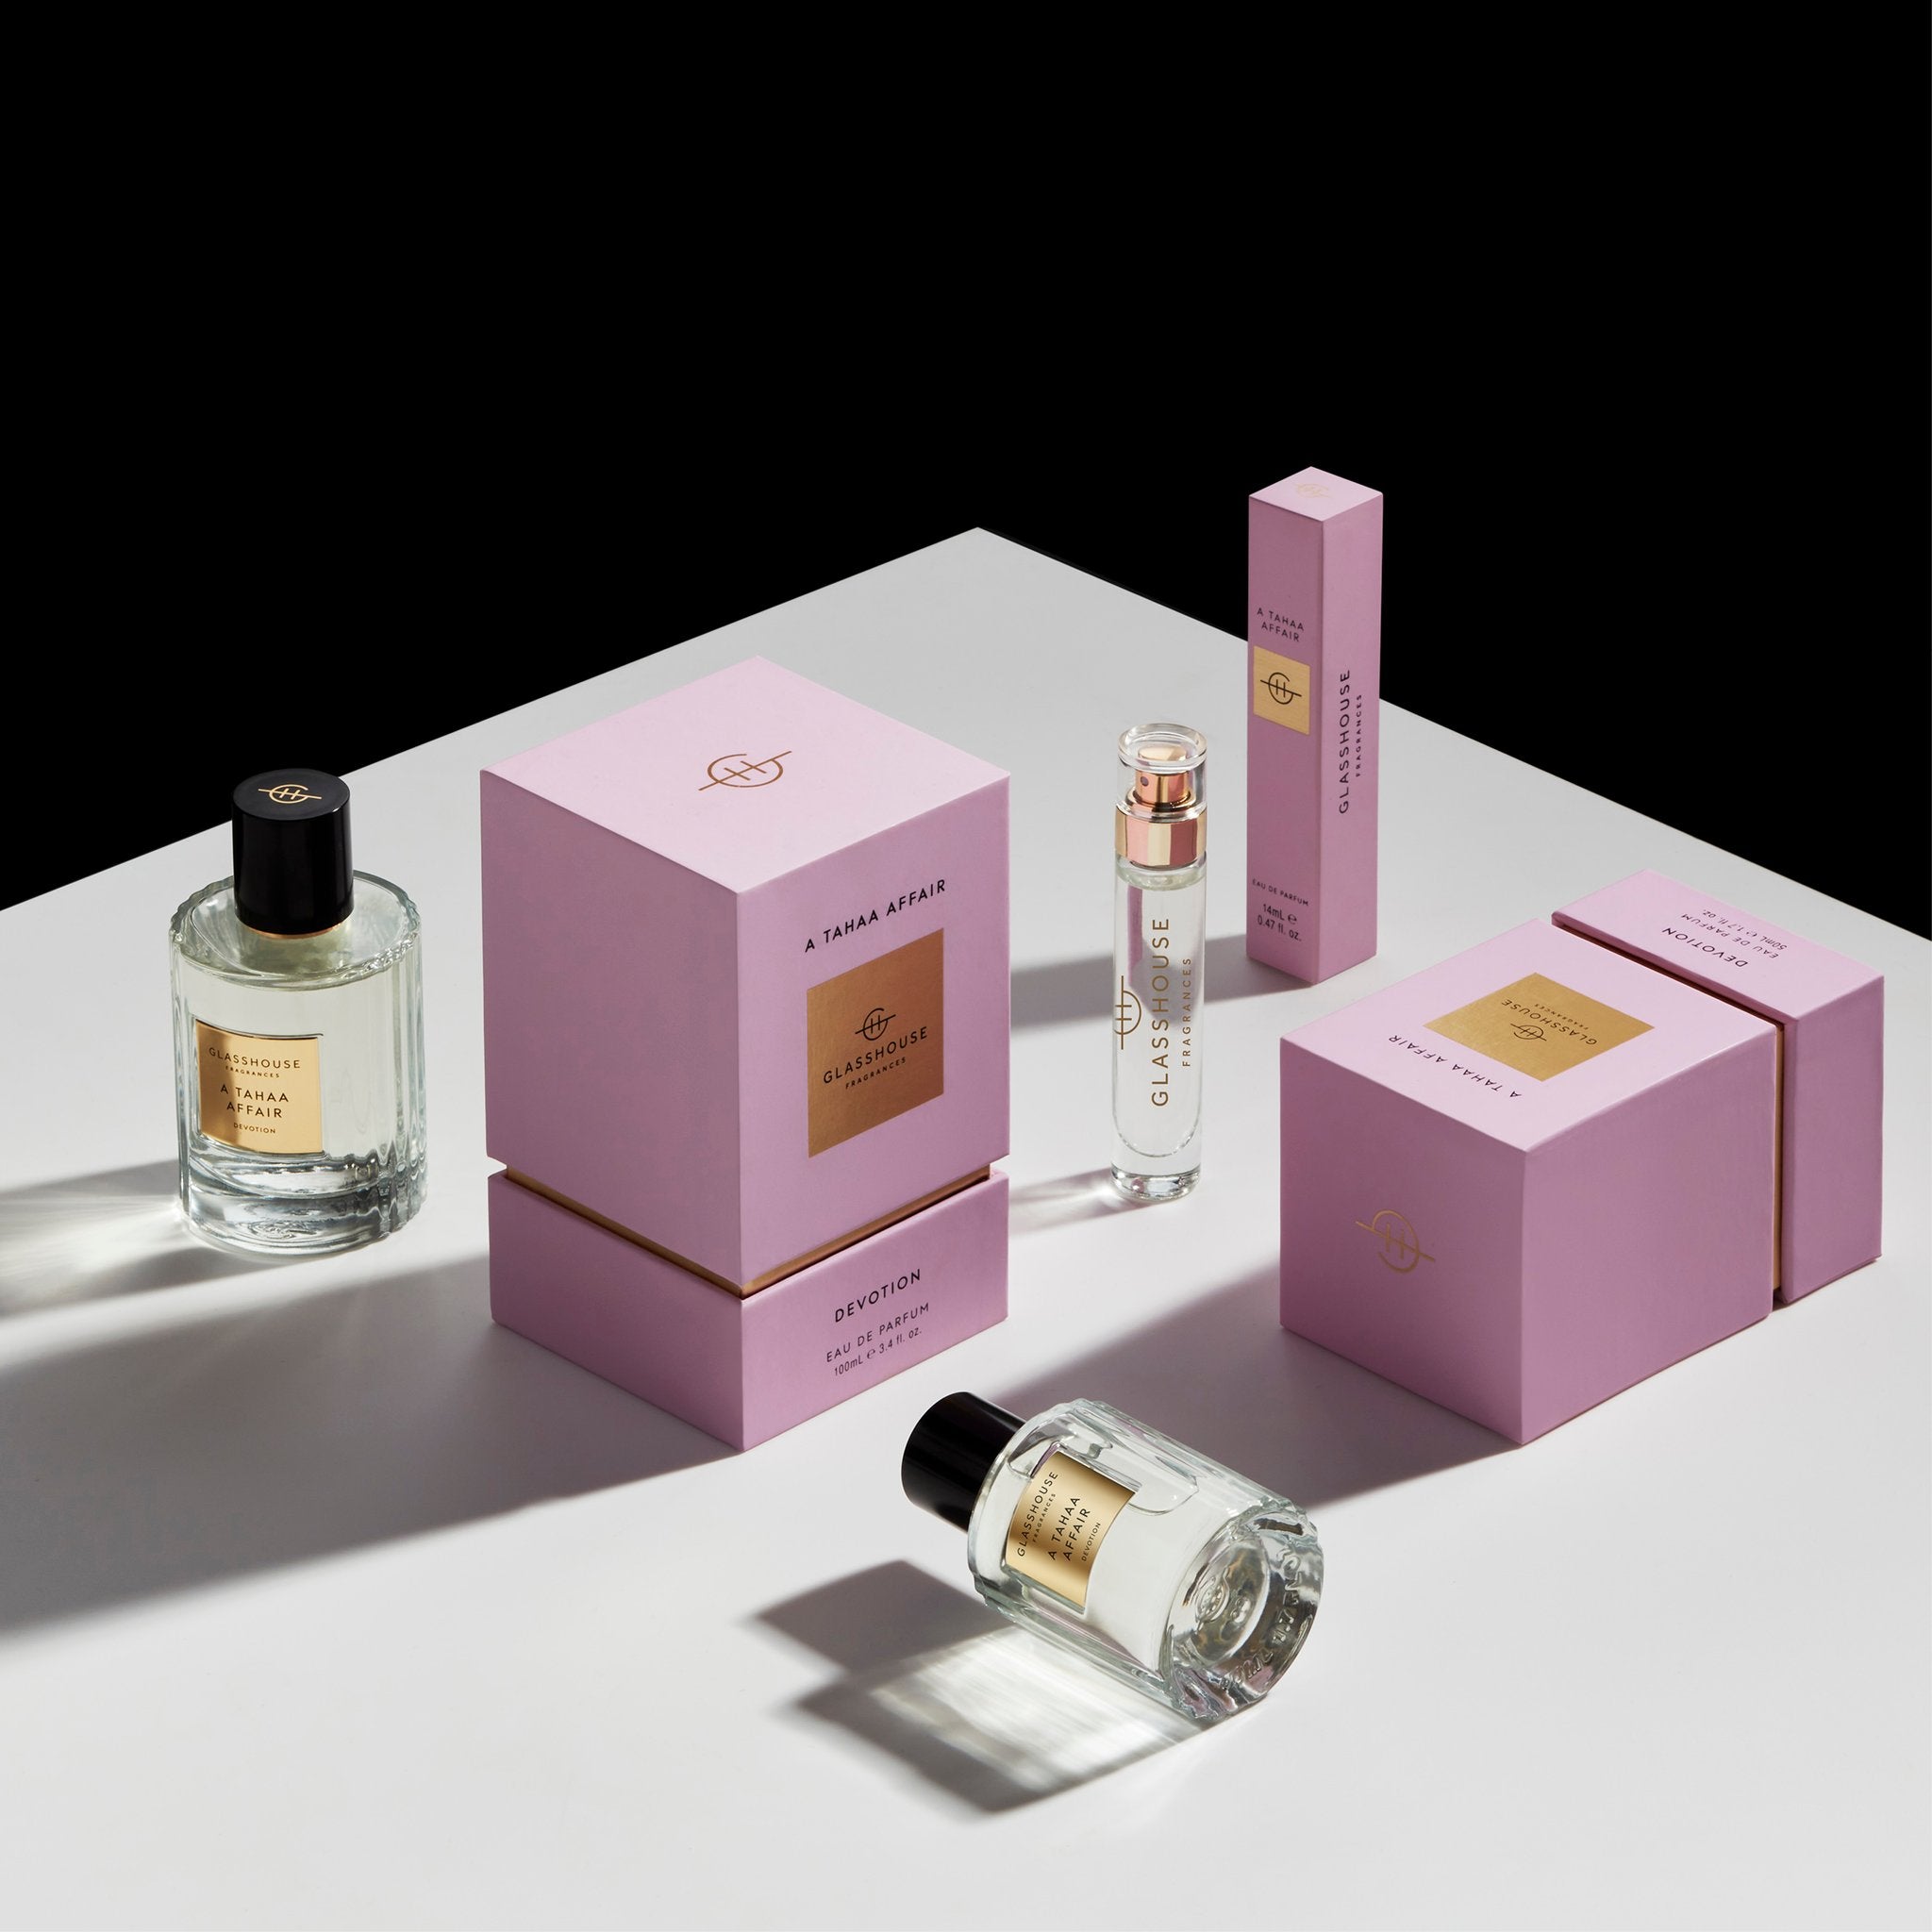 Glasshouse Fragrances 14ml Eau de Parfum - A TAHAA AFFAIR DEVOTION - Butterscotch Caramel & Jasmine